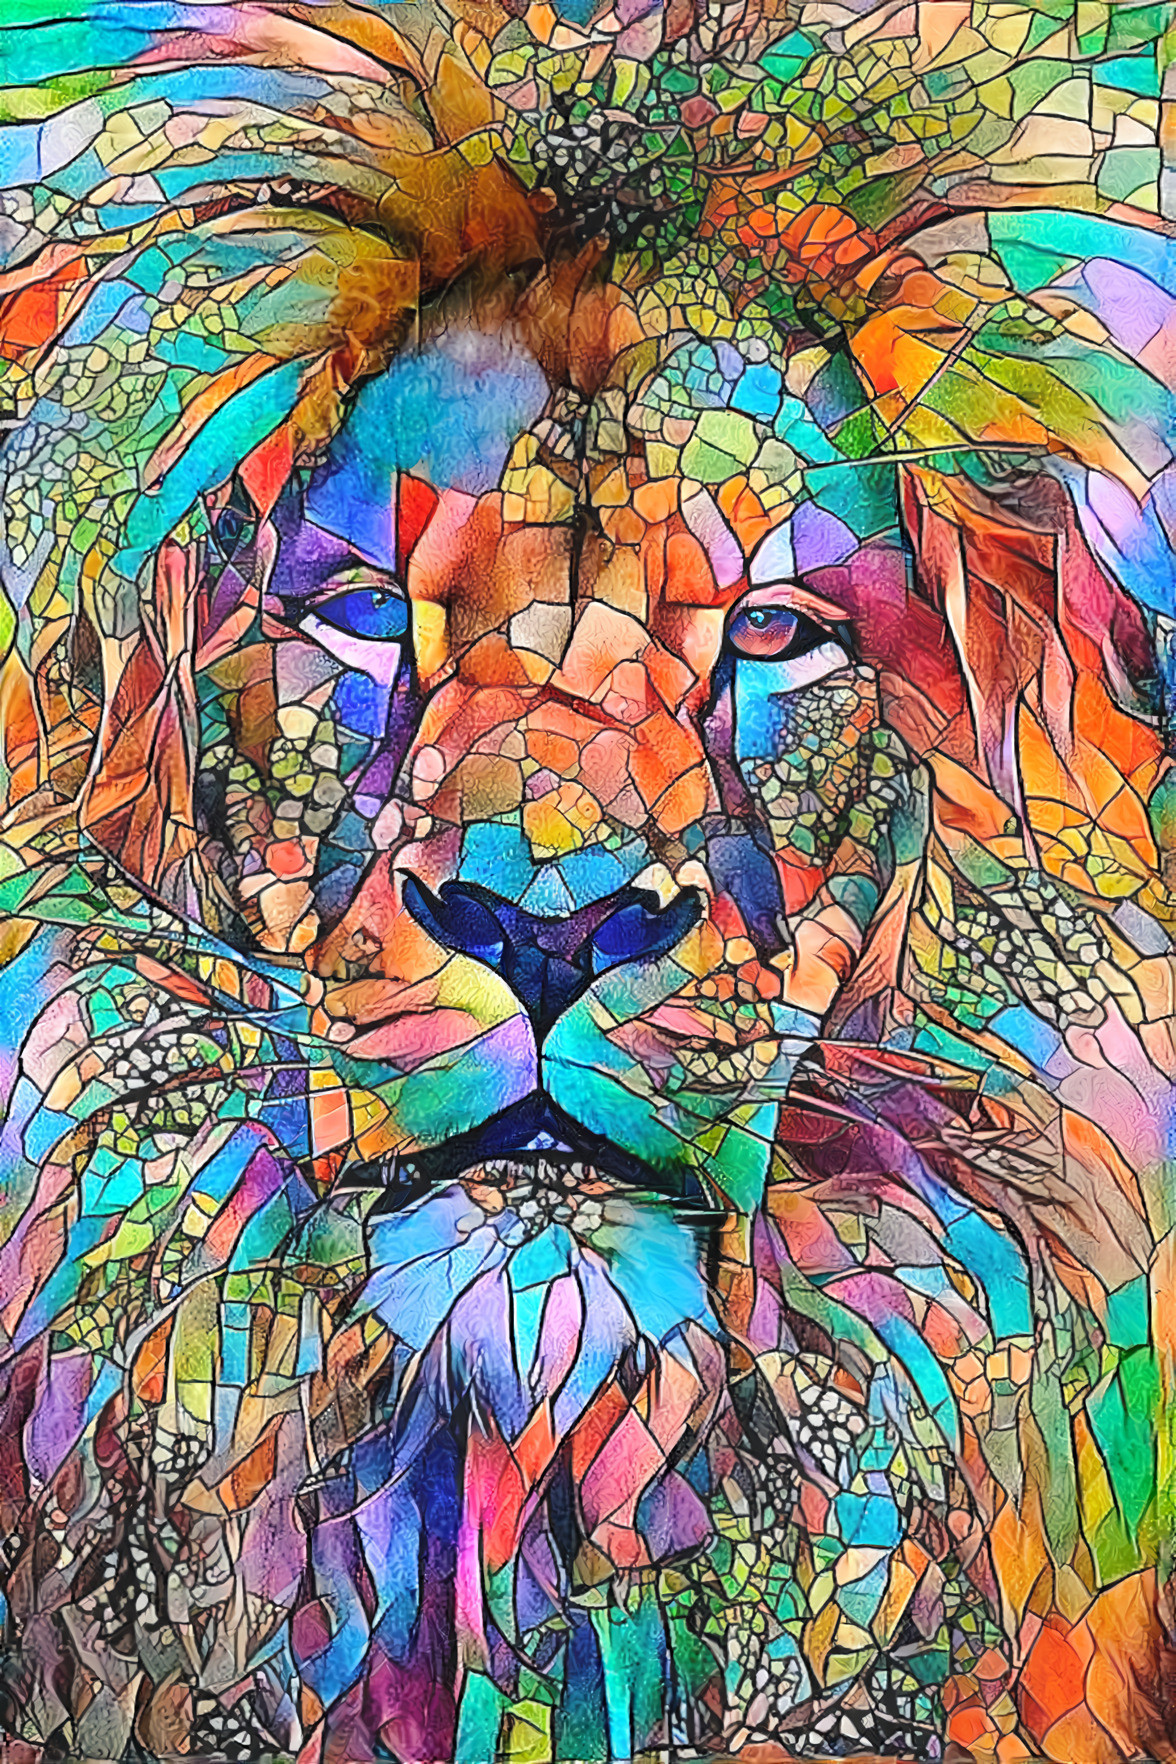 Lion Glass